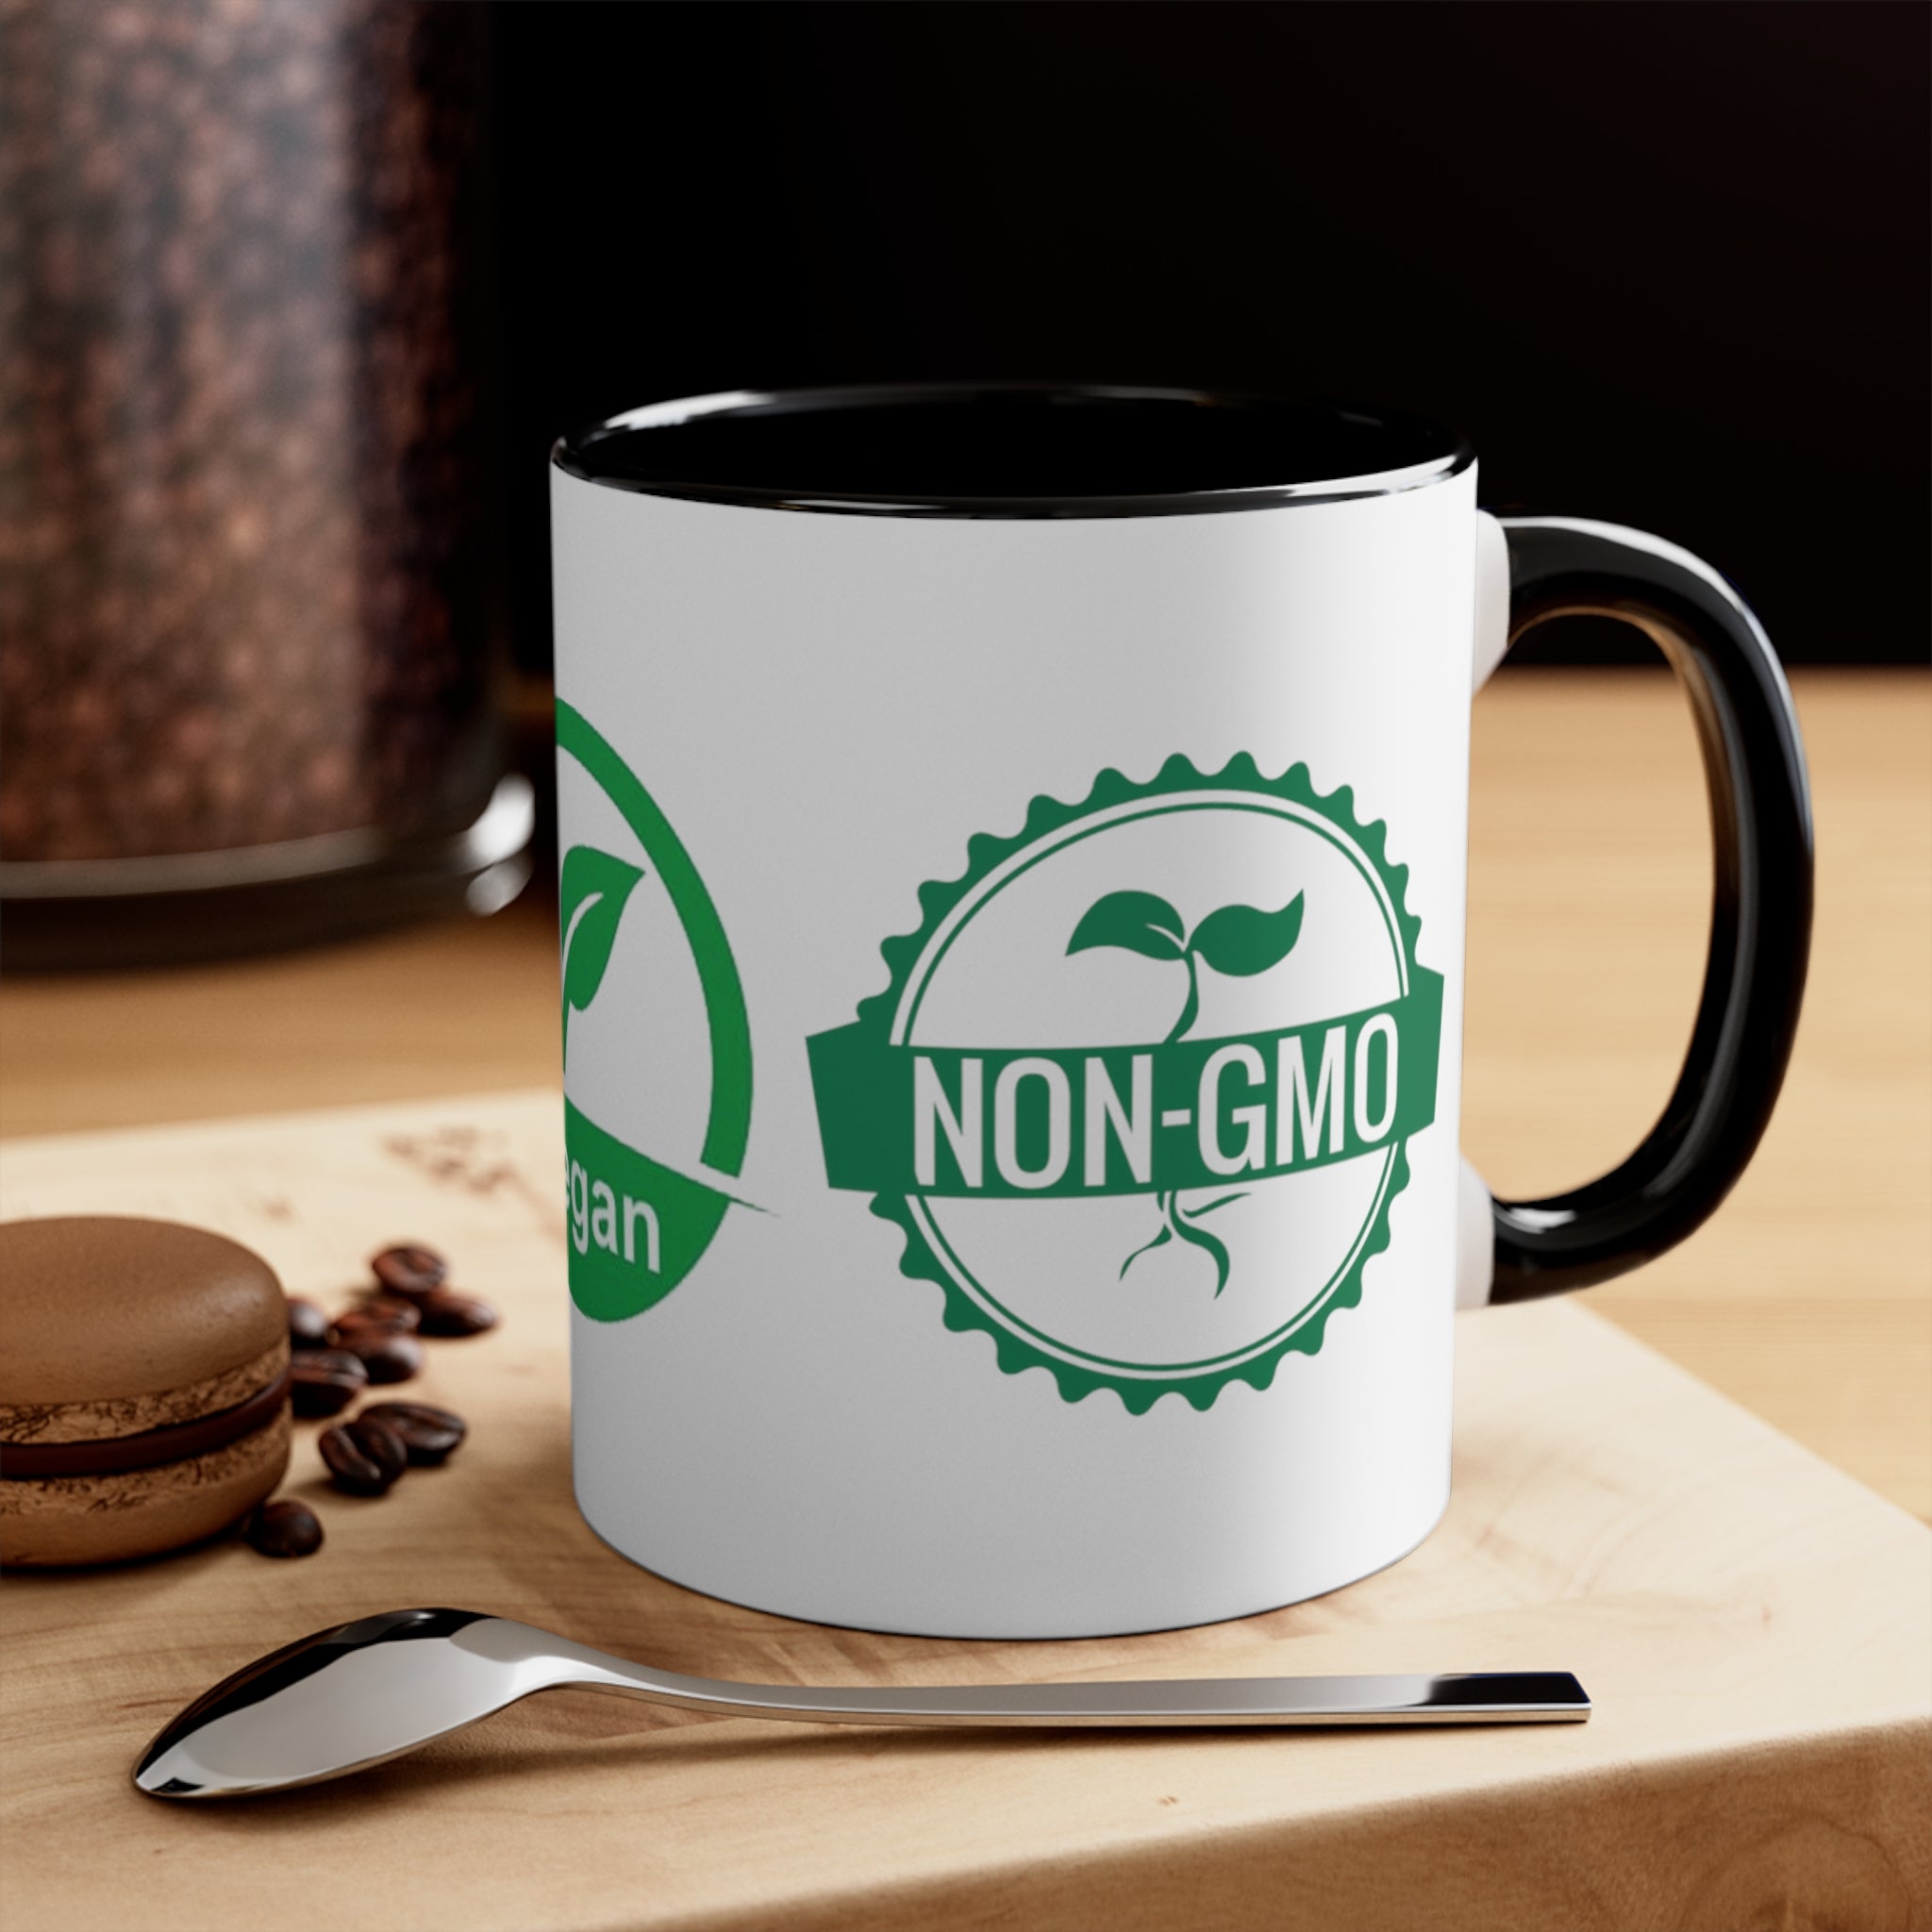 USDA Organic Vegan Non-GMO Accent Coffee Mug, 11oz